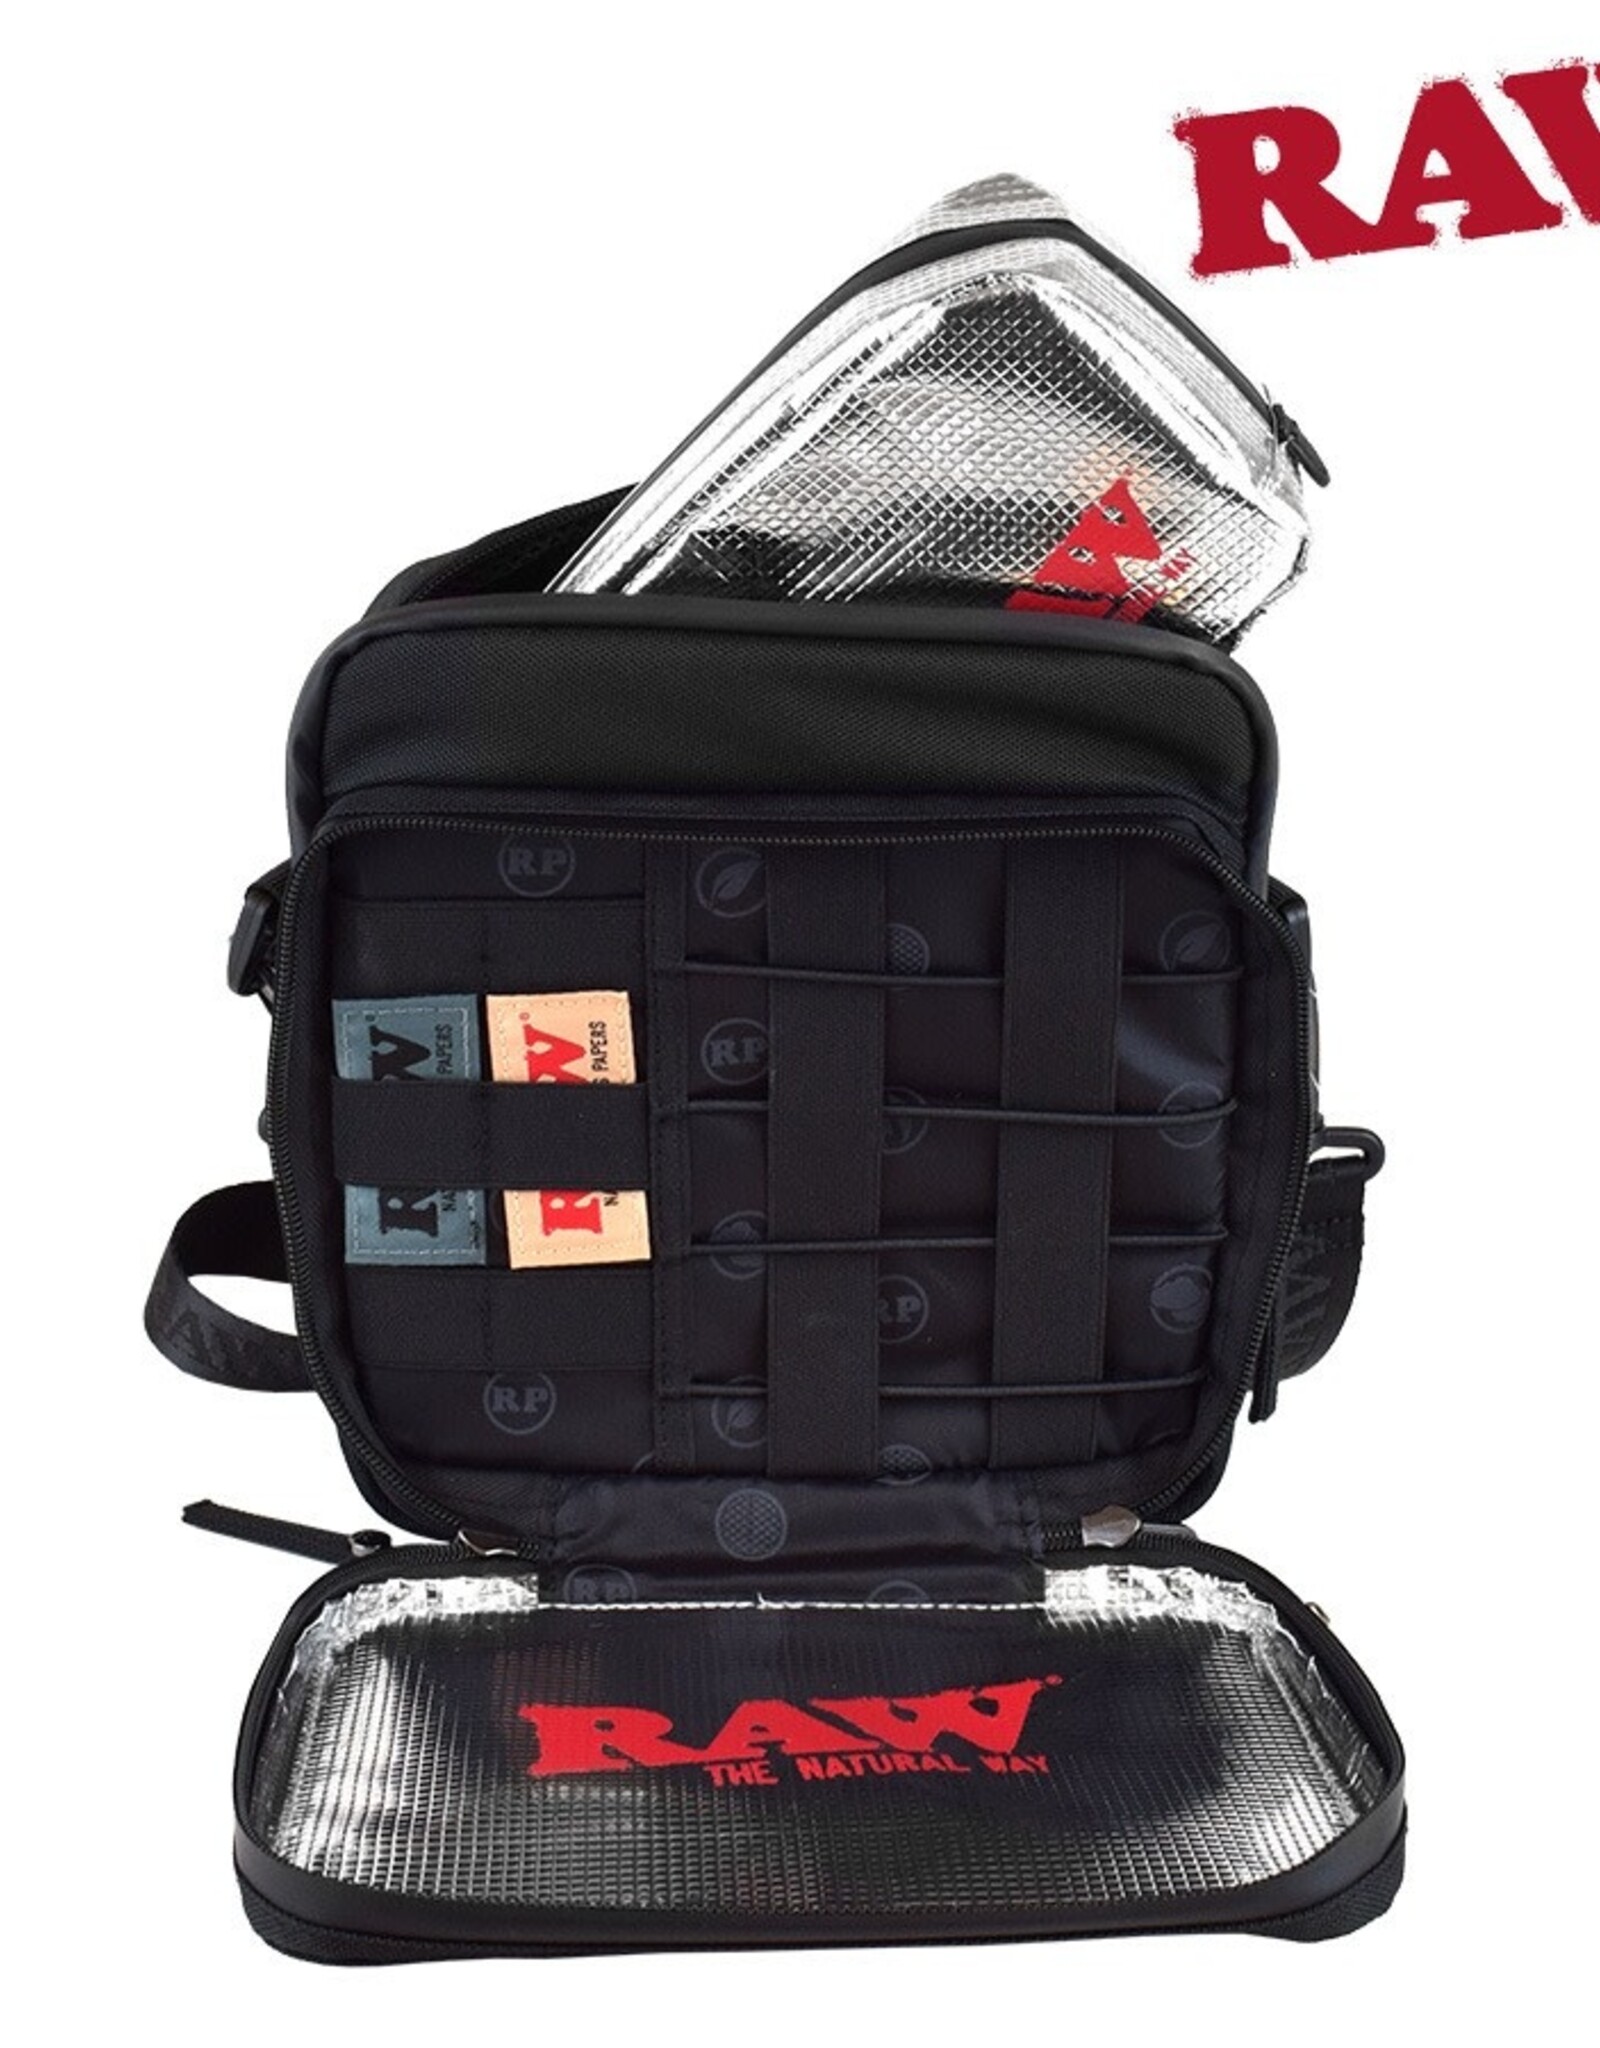 RAW RAW Day Bag